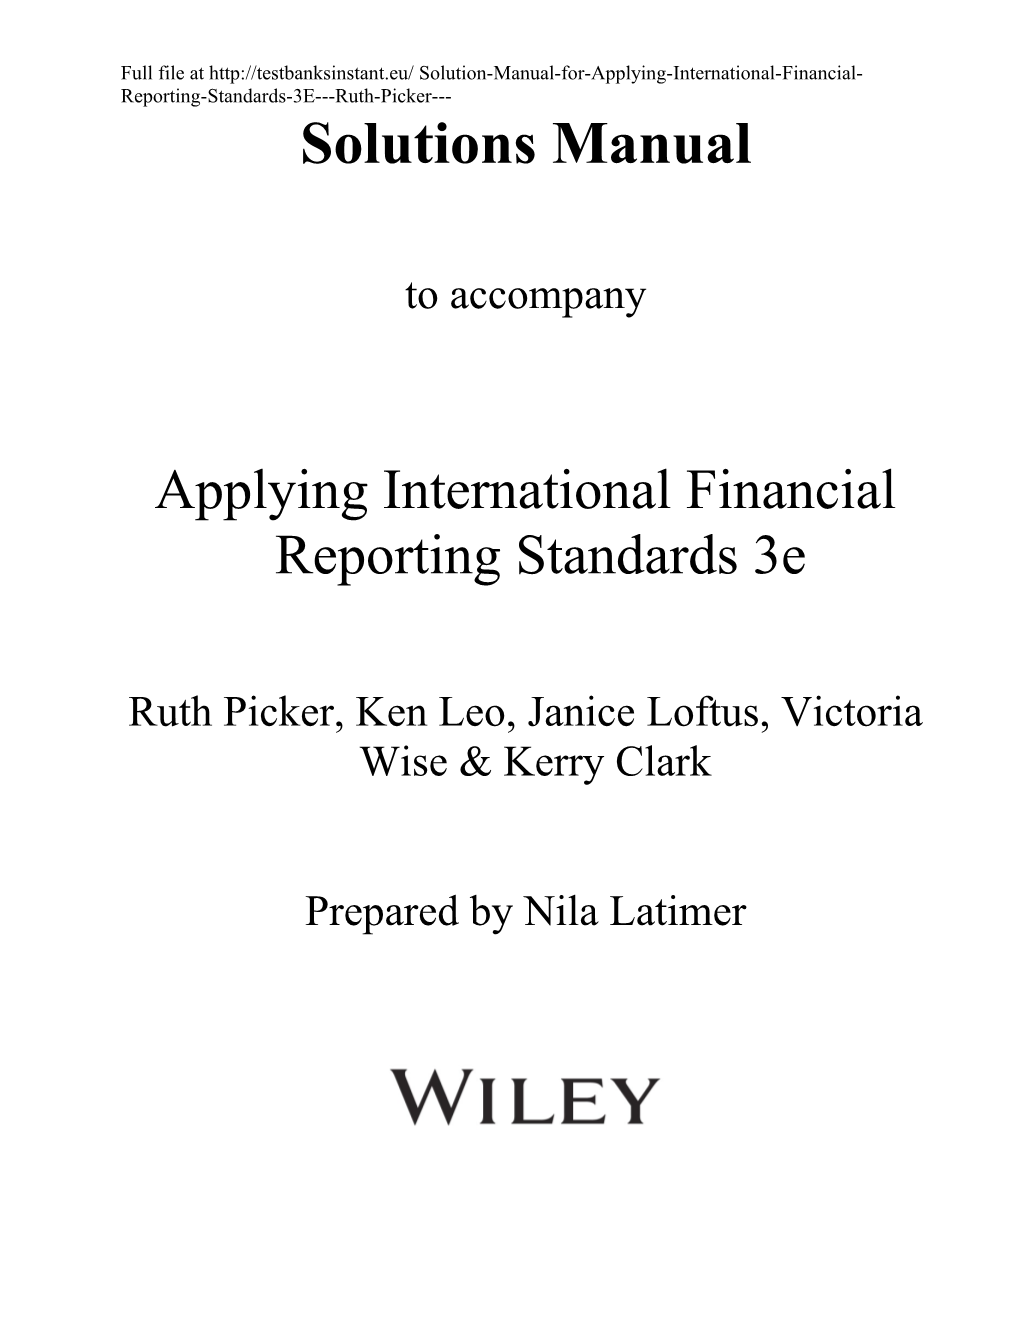 Applying International Financial Reporting Standards 3E